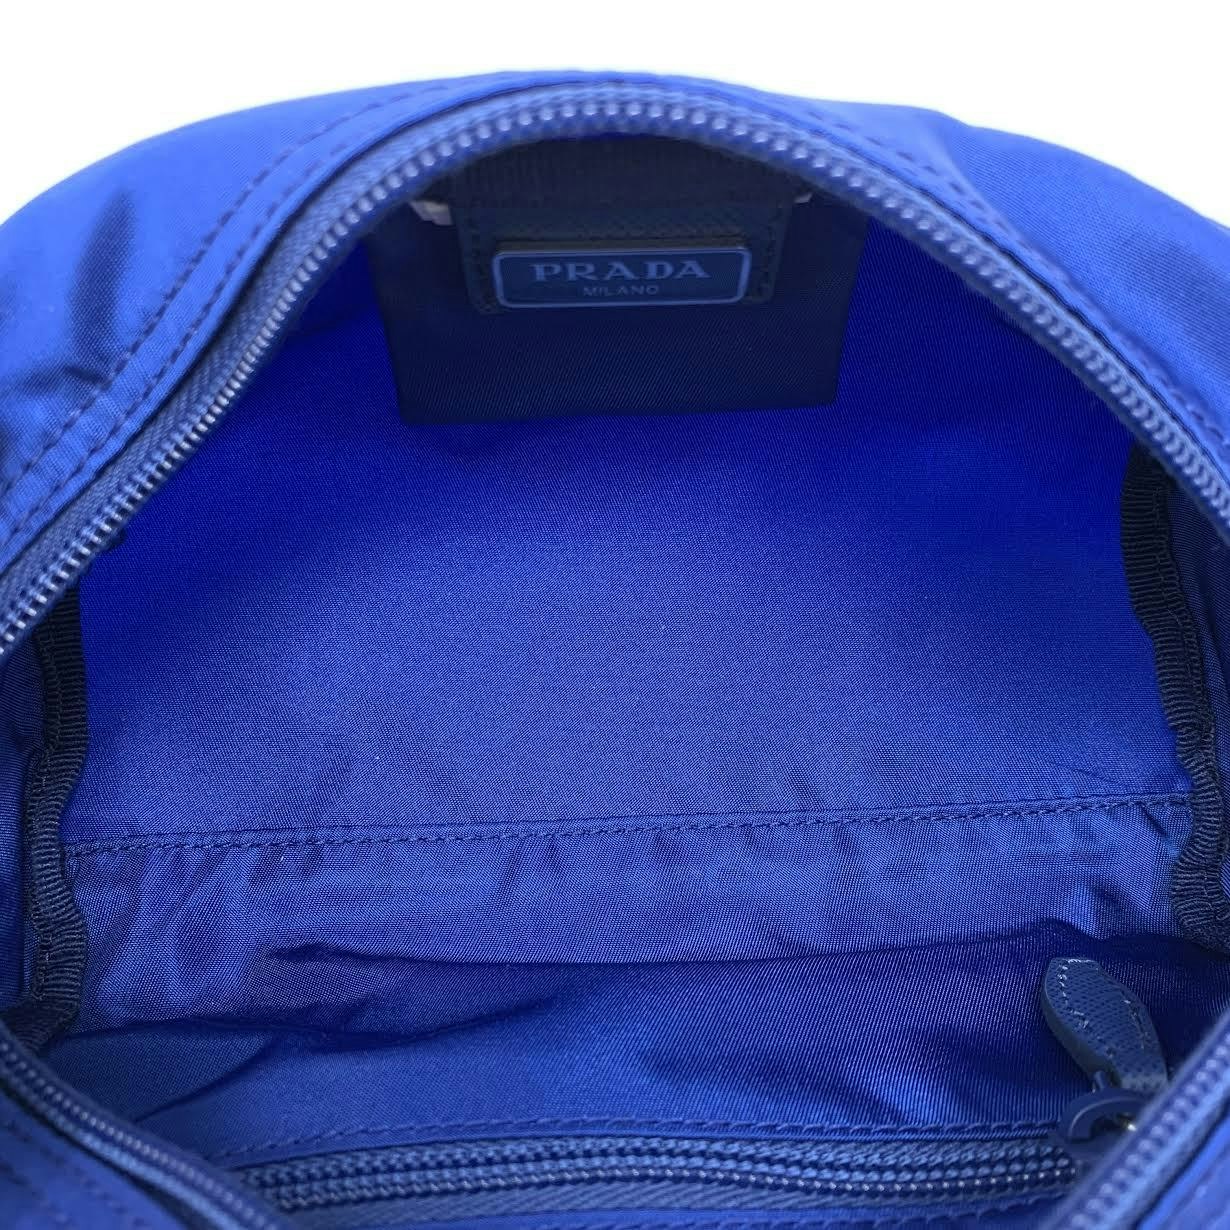 Zippered Toiletry Bag 2 Tone Blue